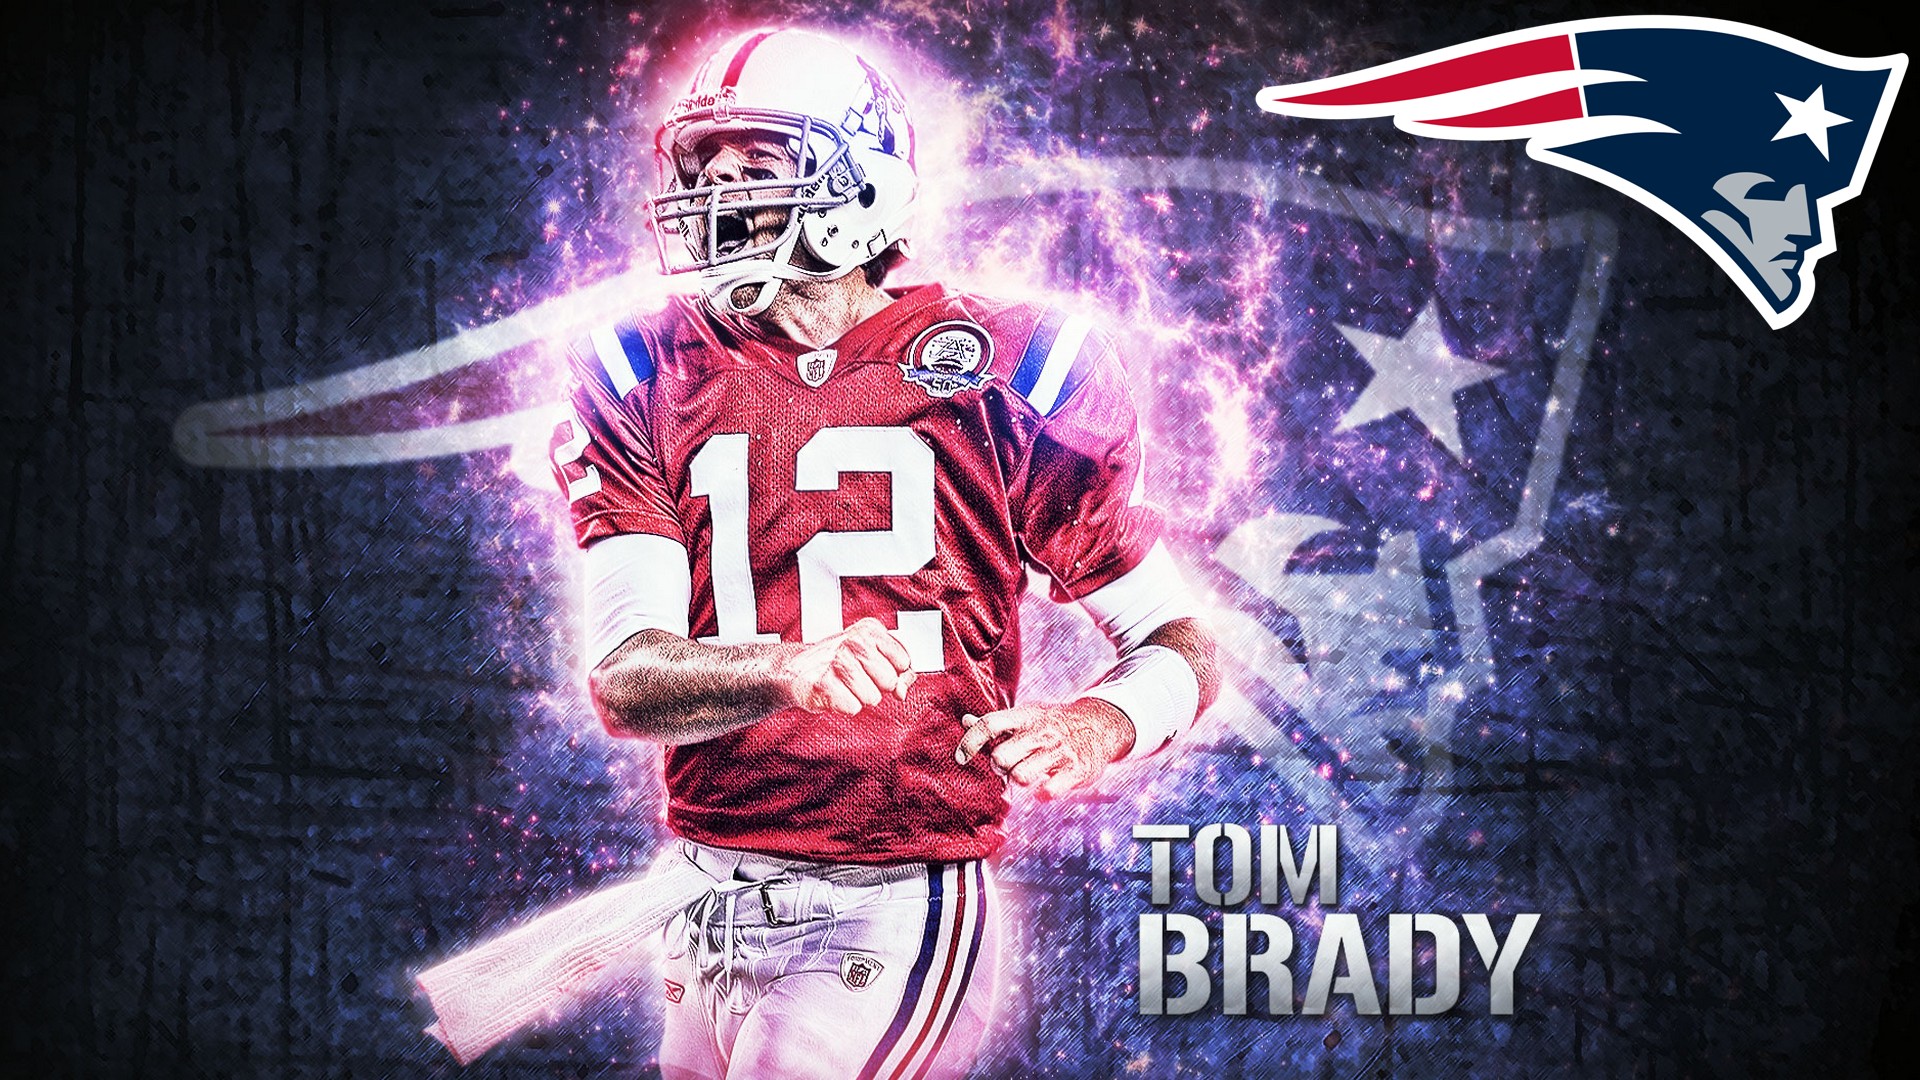 Free download Tom Brady Patriots Mac Backgrounds 2021 NFL Football